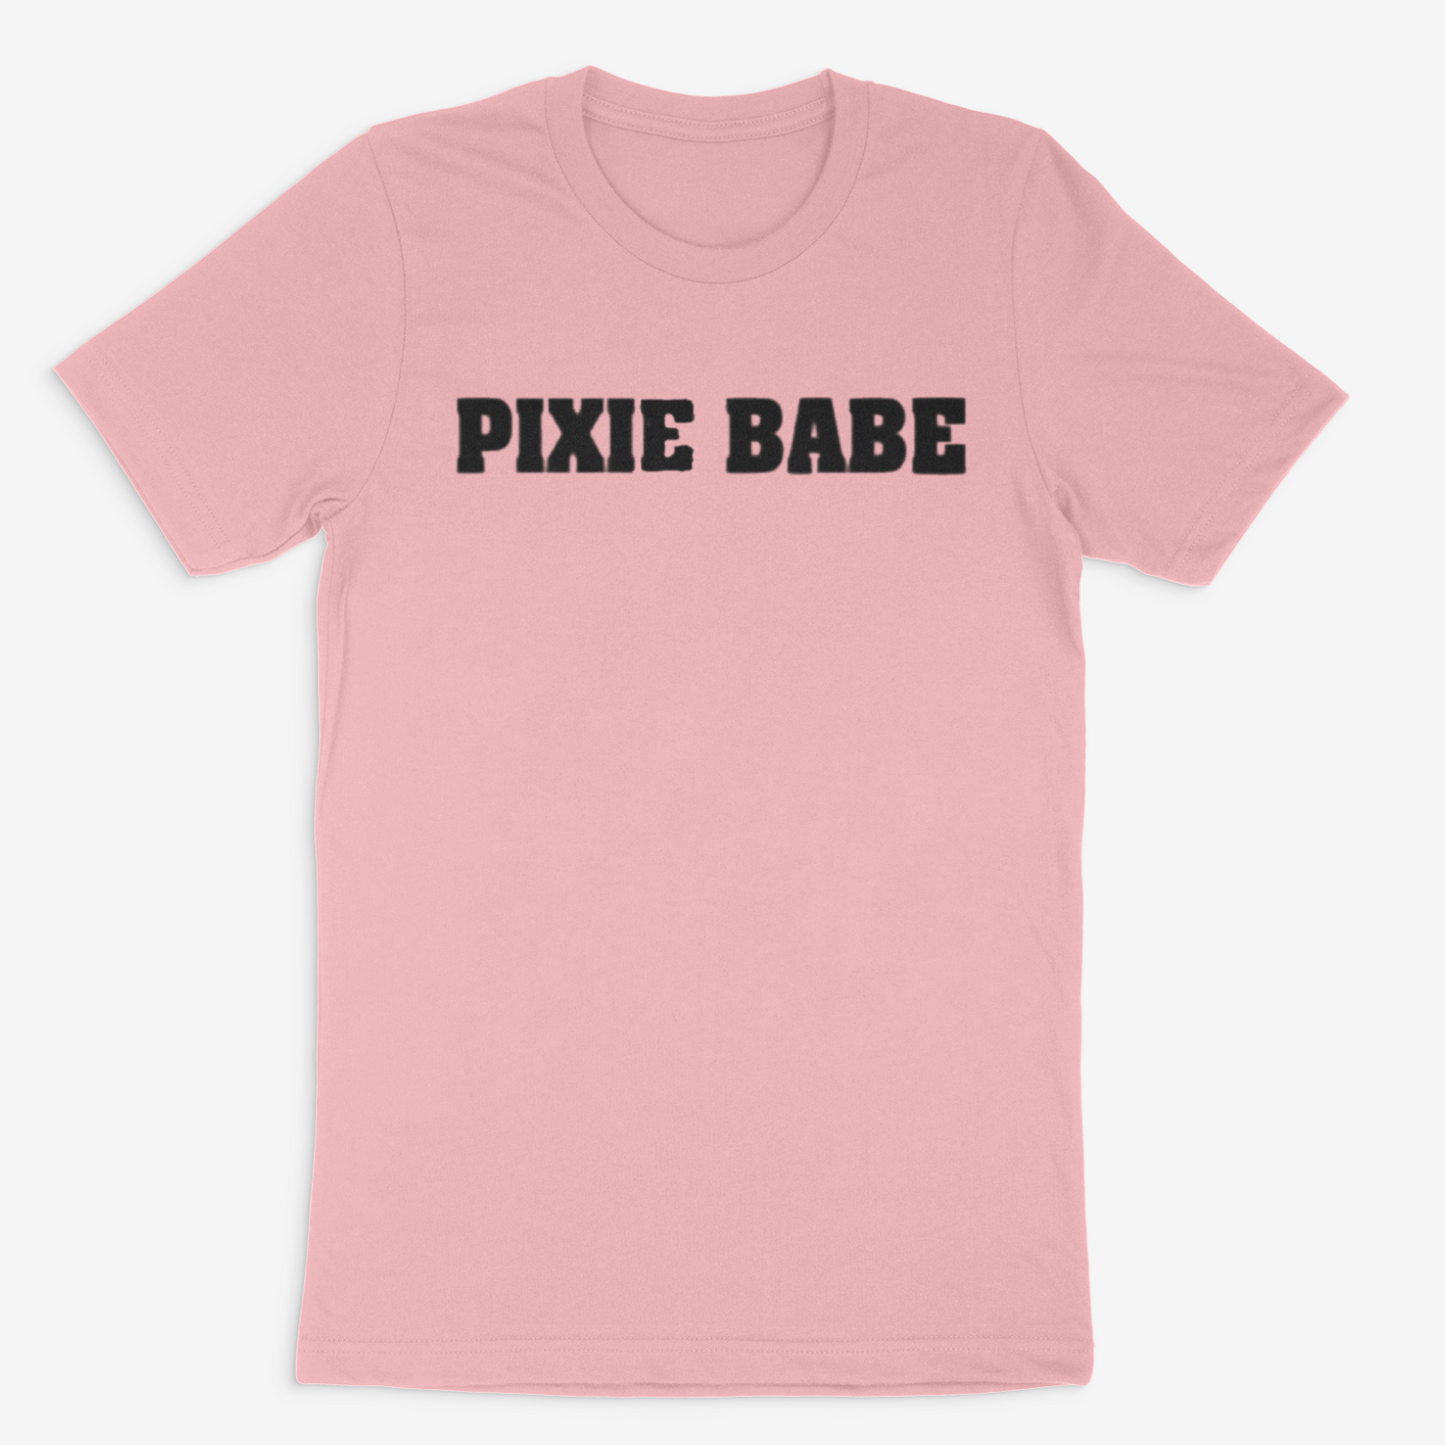 Pixie Babe Tee (Black)